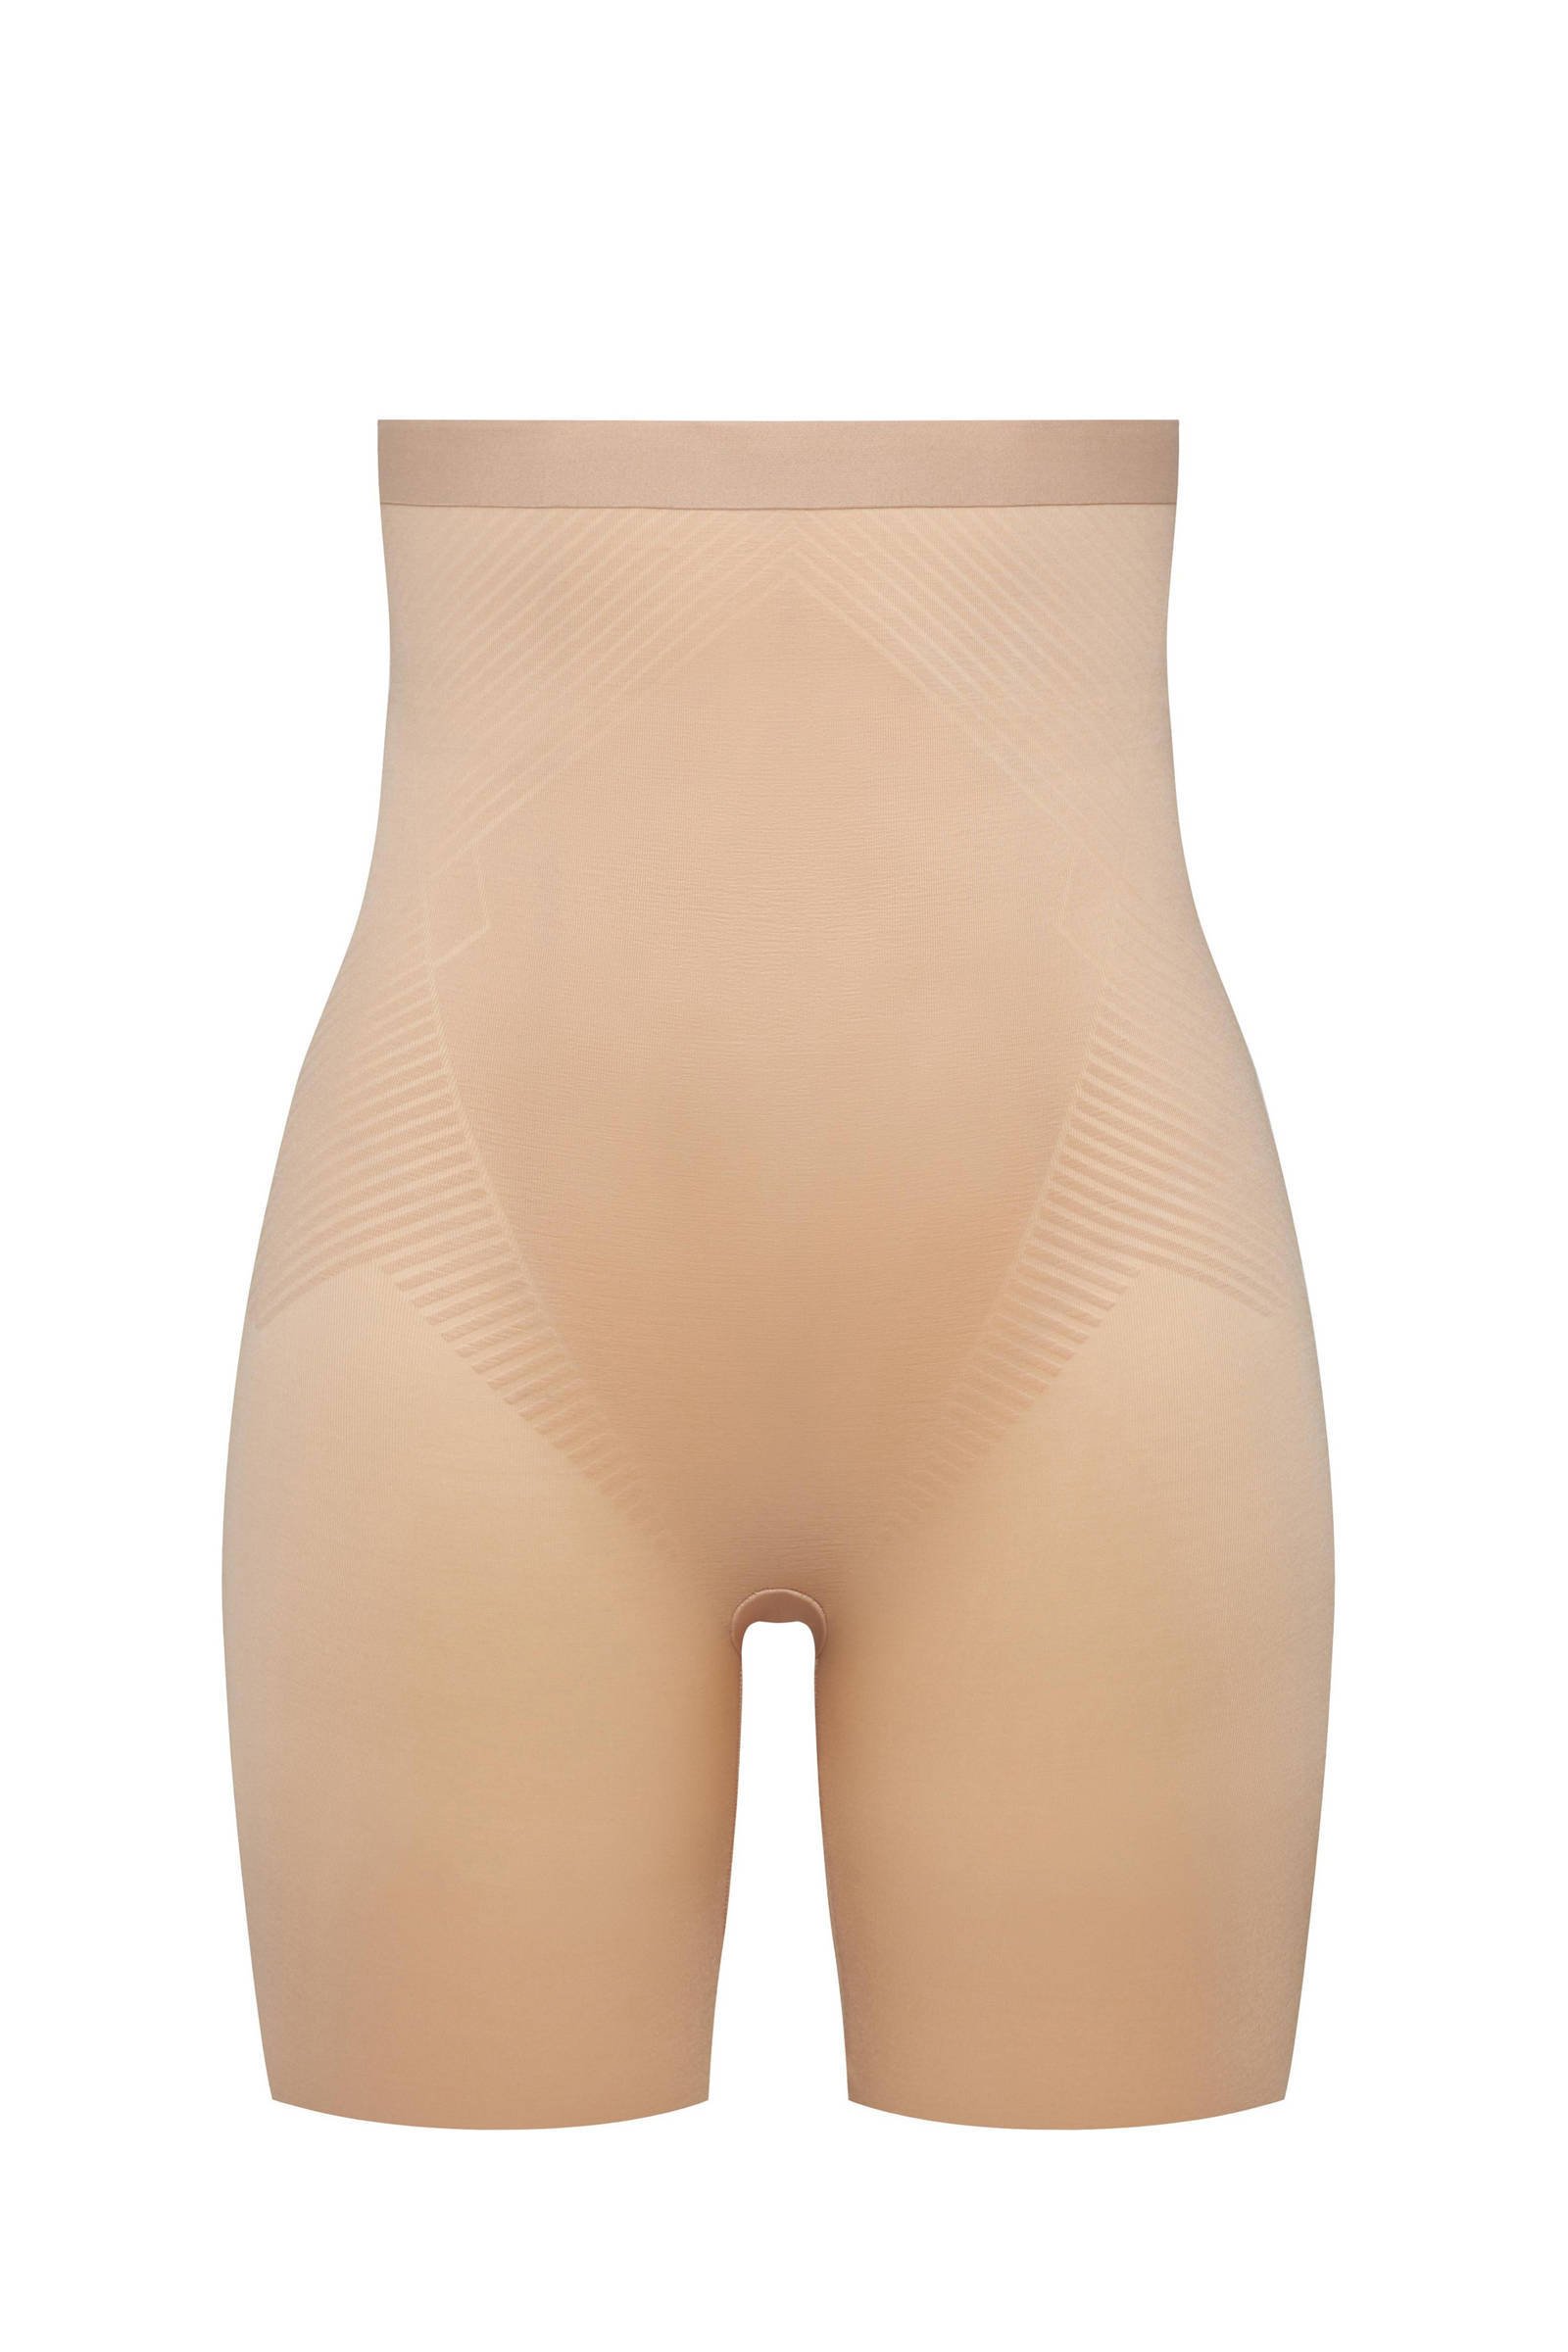 wehkamp Dames Kleding Lingerie & Ondermode Shapewear Medium corrigerende short Thinstincts 2.0 beige 